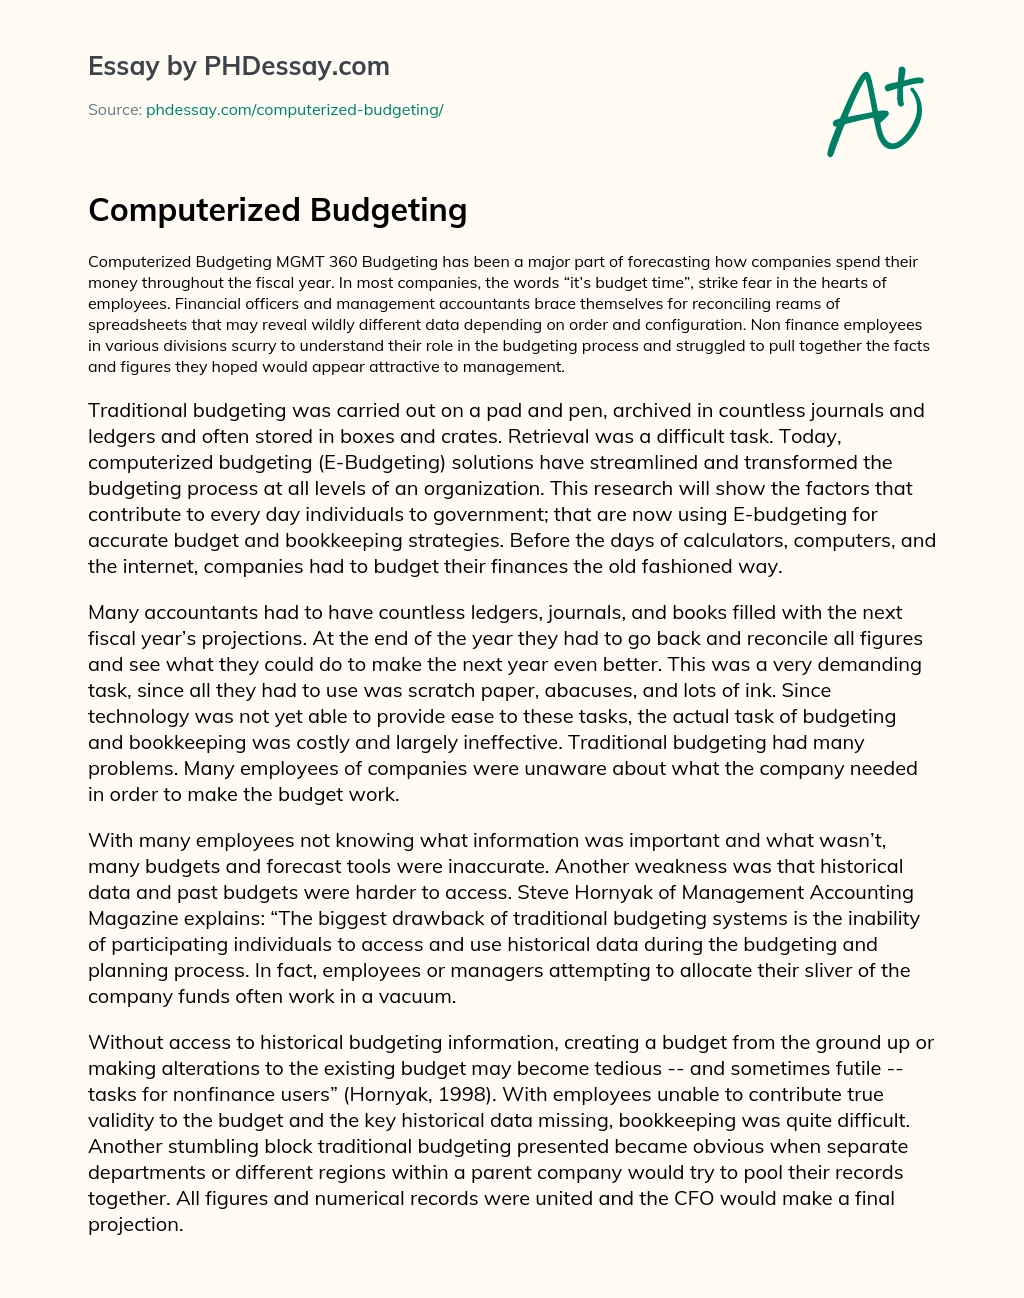 Computerized Budgeting essay